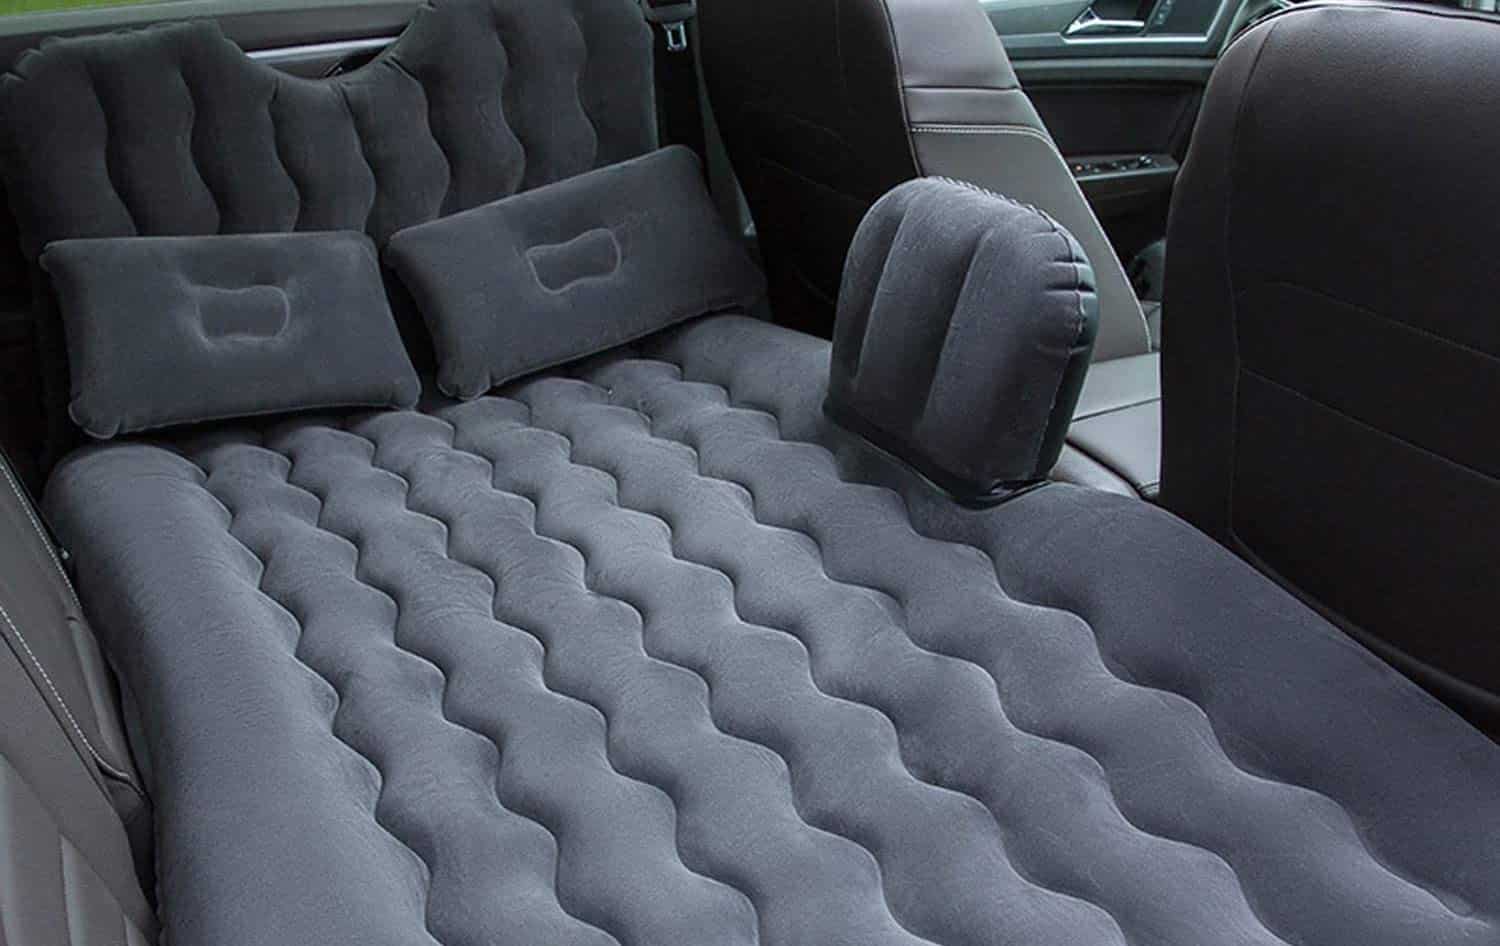 air mattress that fits in suv